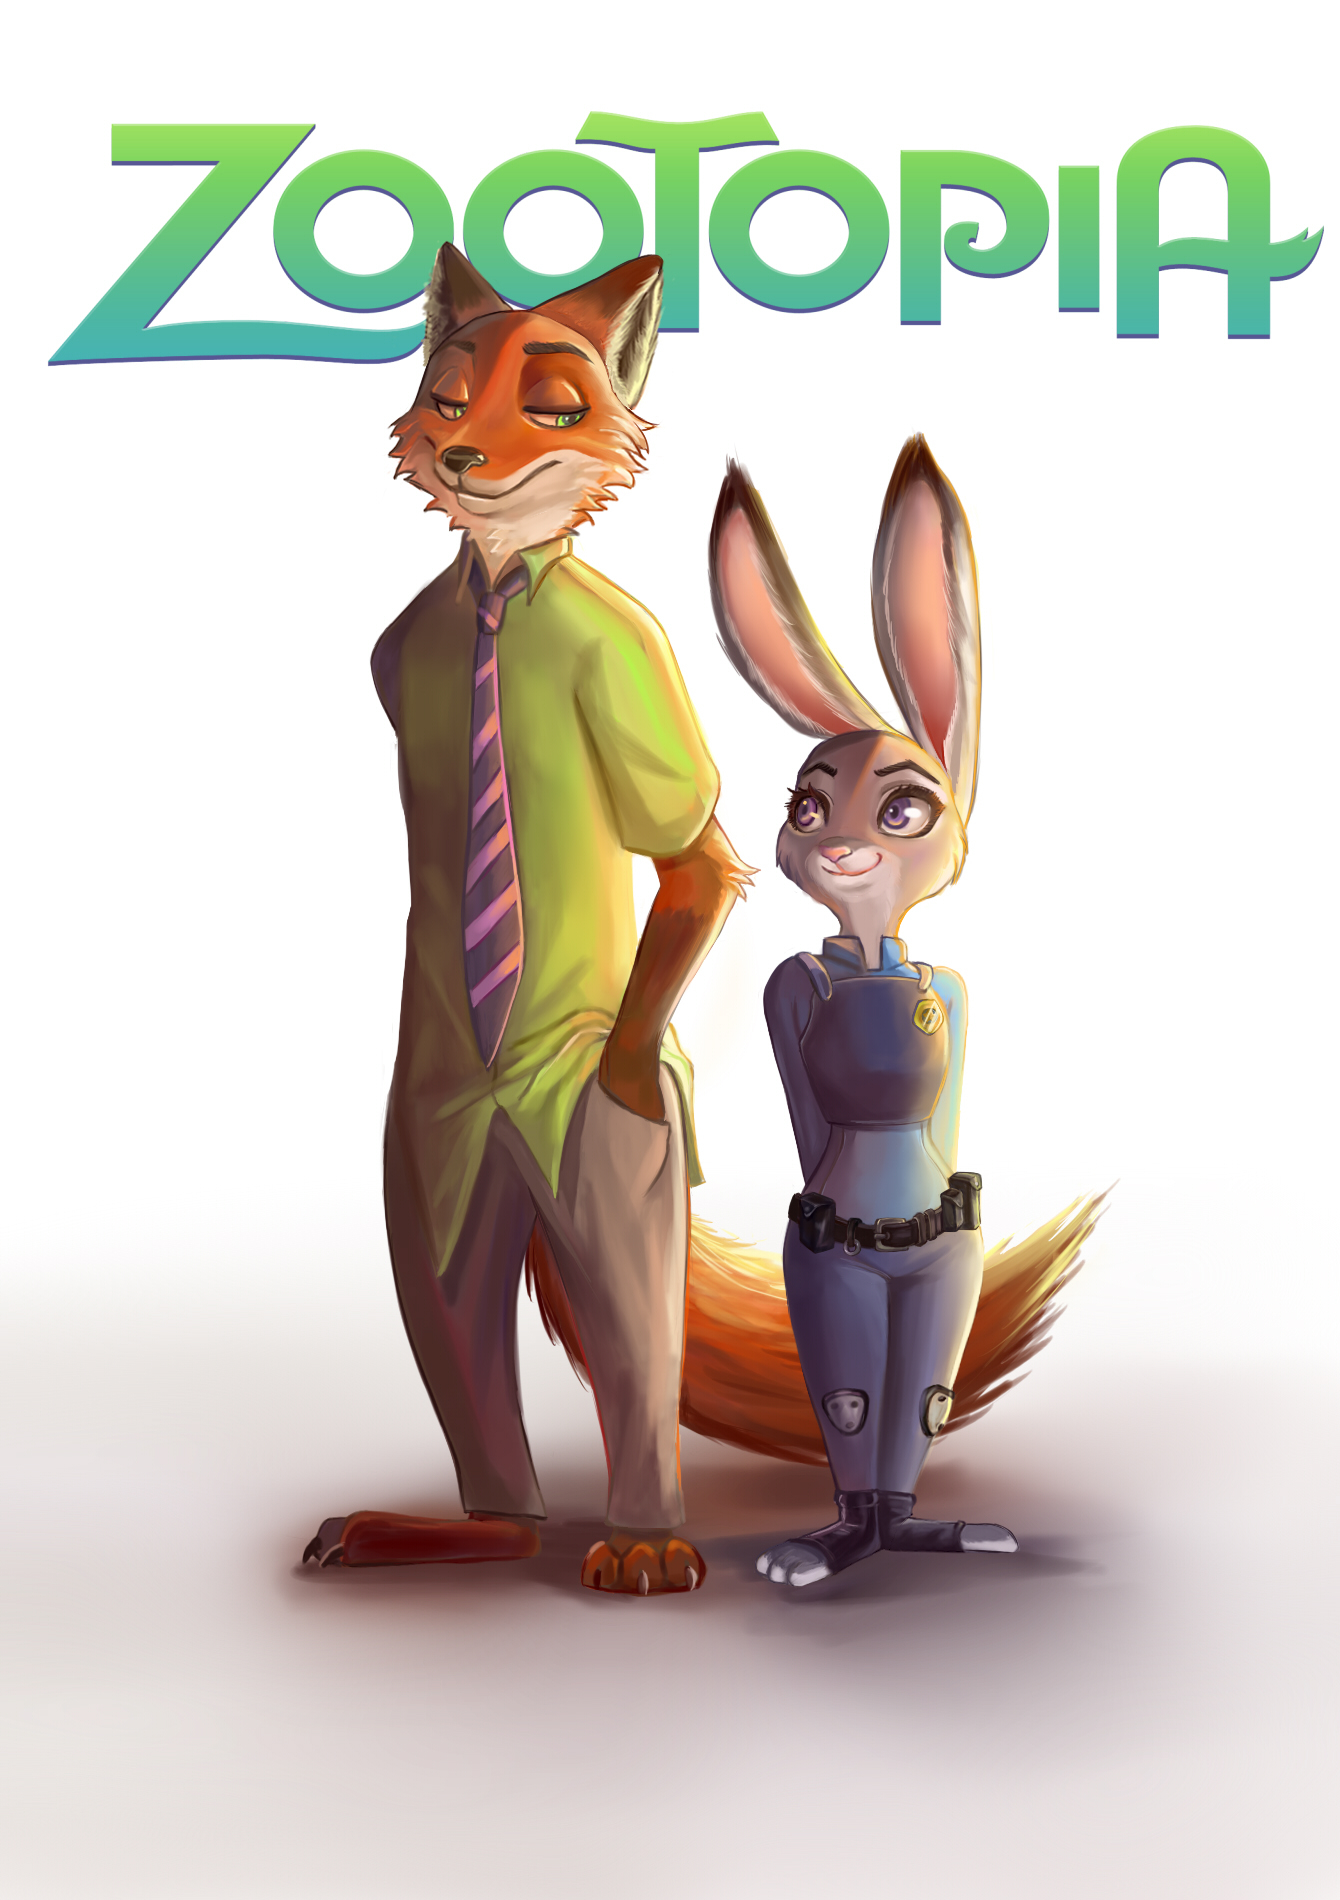 Zootopia#2 Hardline by xshot01 -- Fur Affinity [dot] net